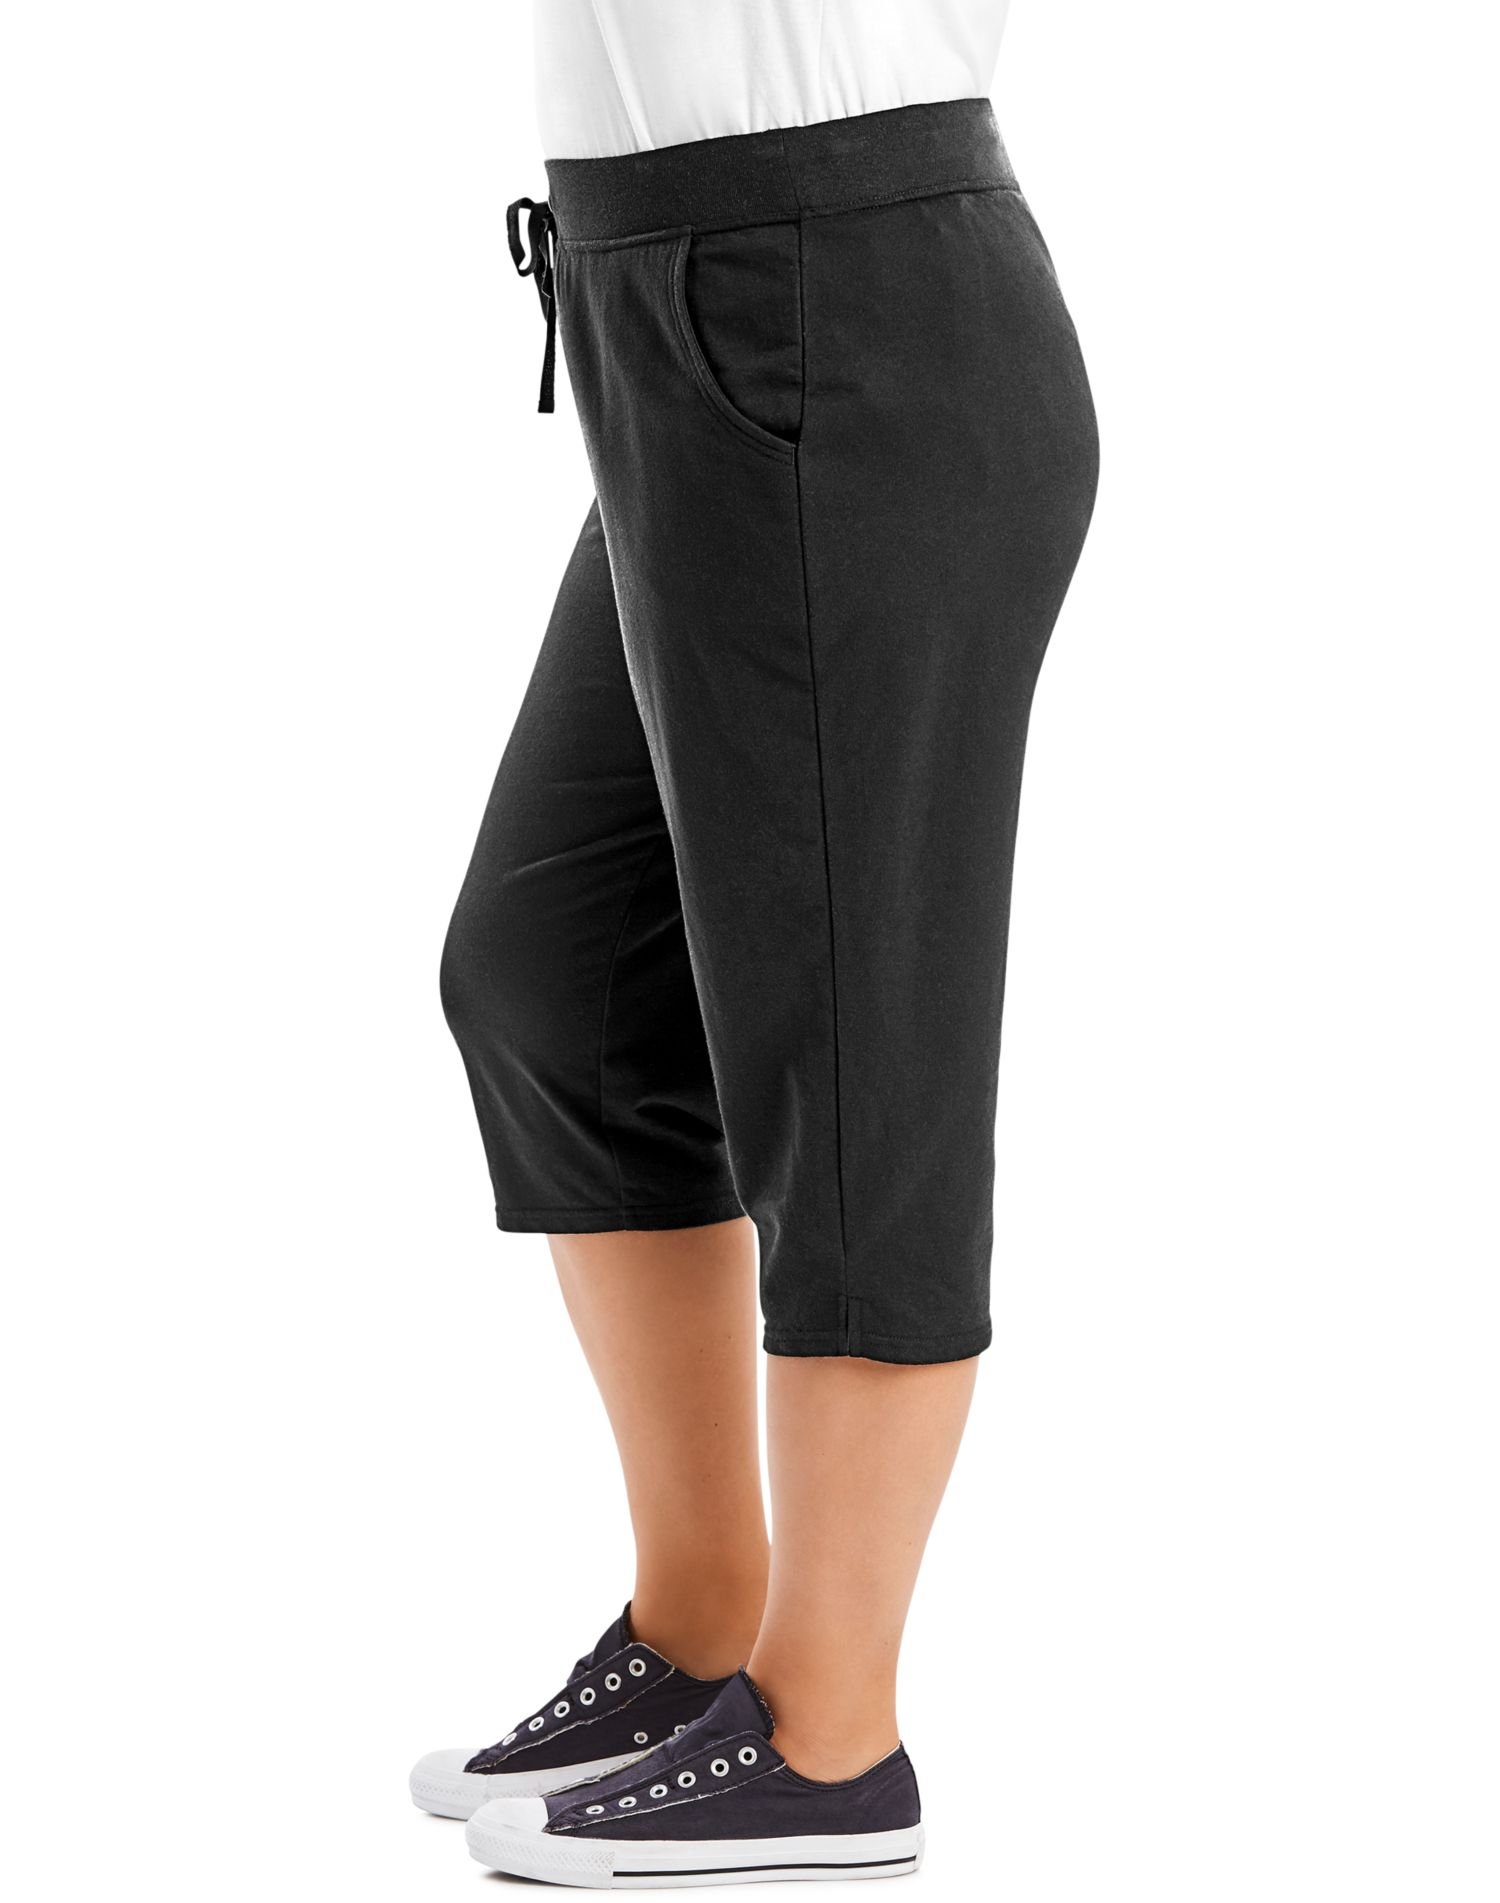 Just My Size Women's Sweatspants, French Terry Capris with Pockets, JMS Women's Capri Pocket Sweatpants